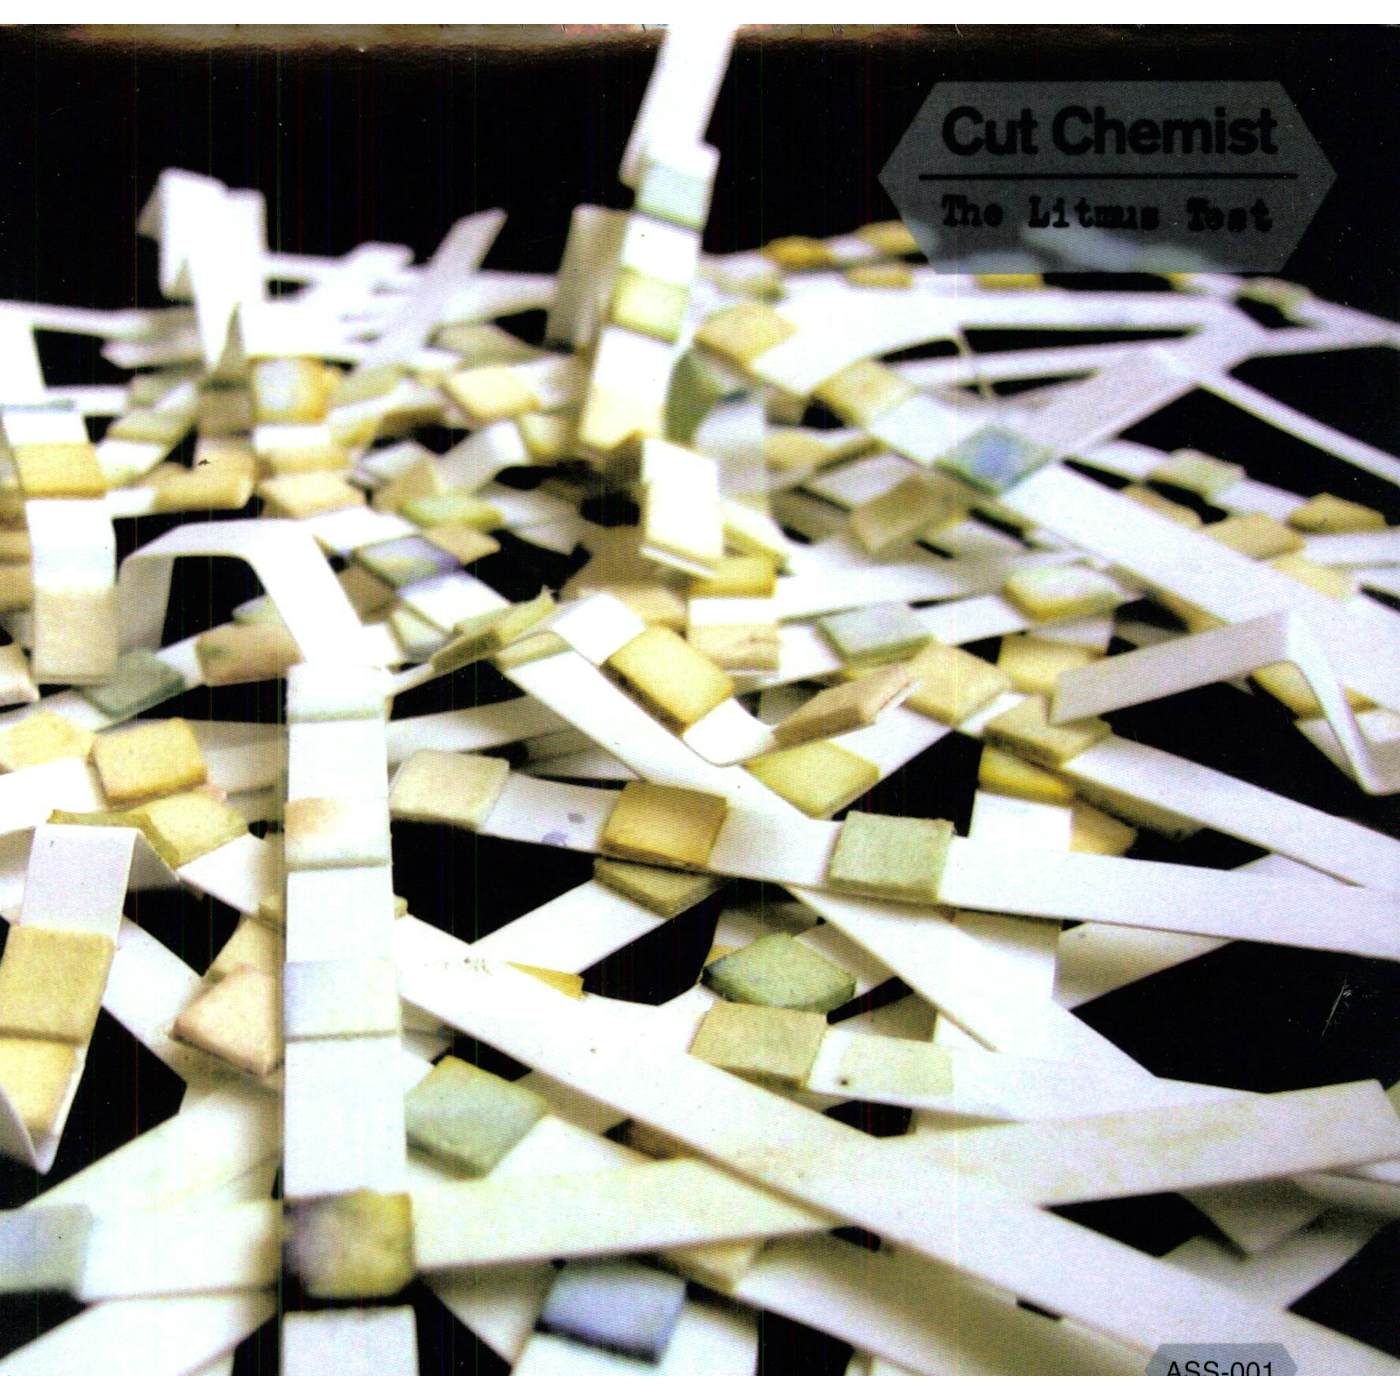 Cut Chemist LITMUS TEST Vinyl Record